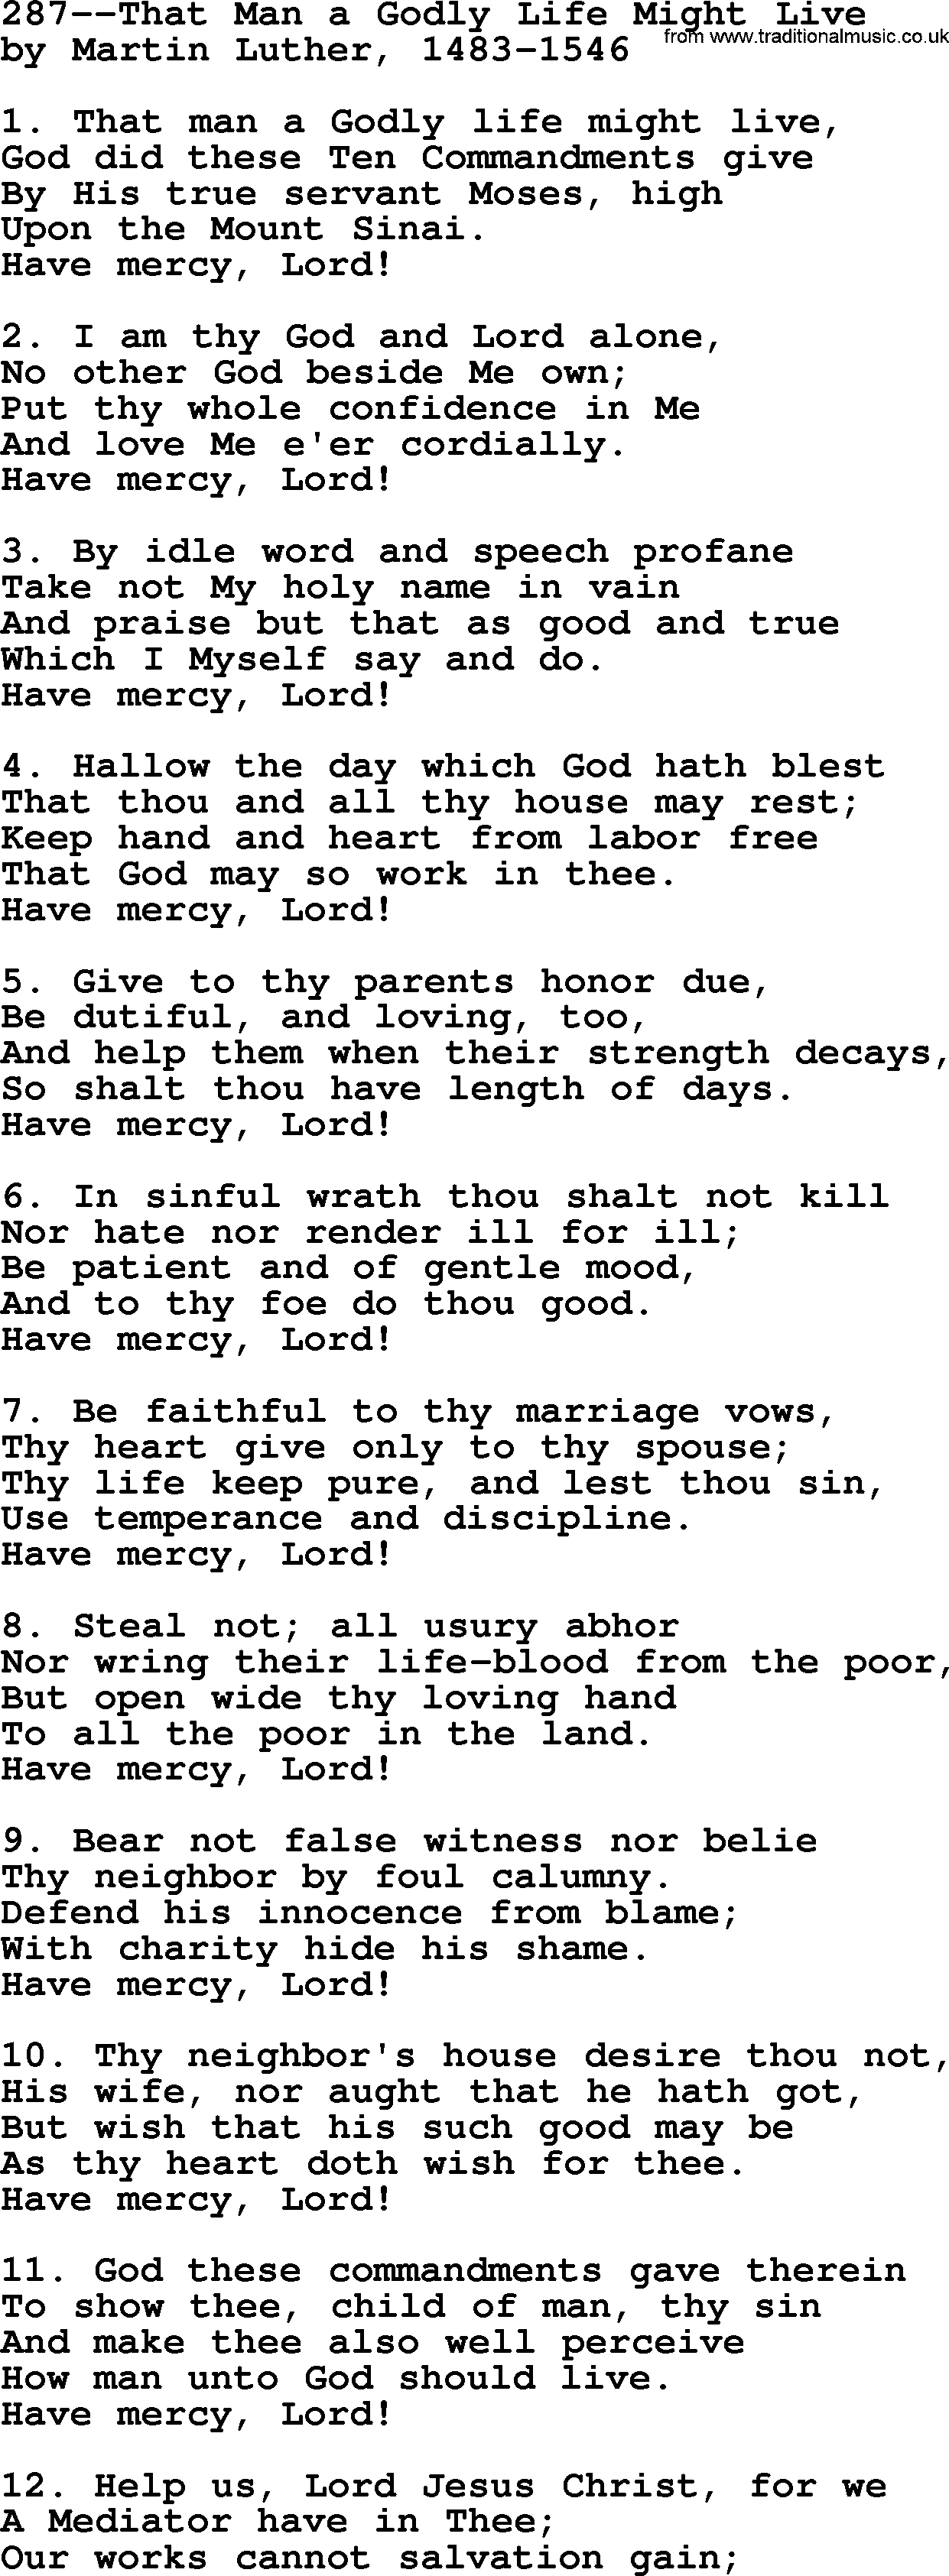 Lutheran Hymn: 287--That Man a Godly Life Might Live.txt lyrics with PDF